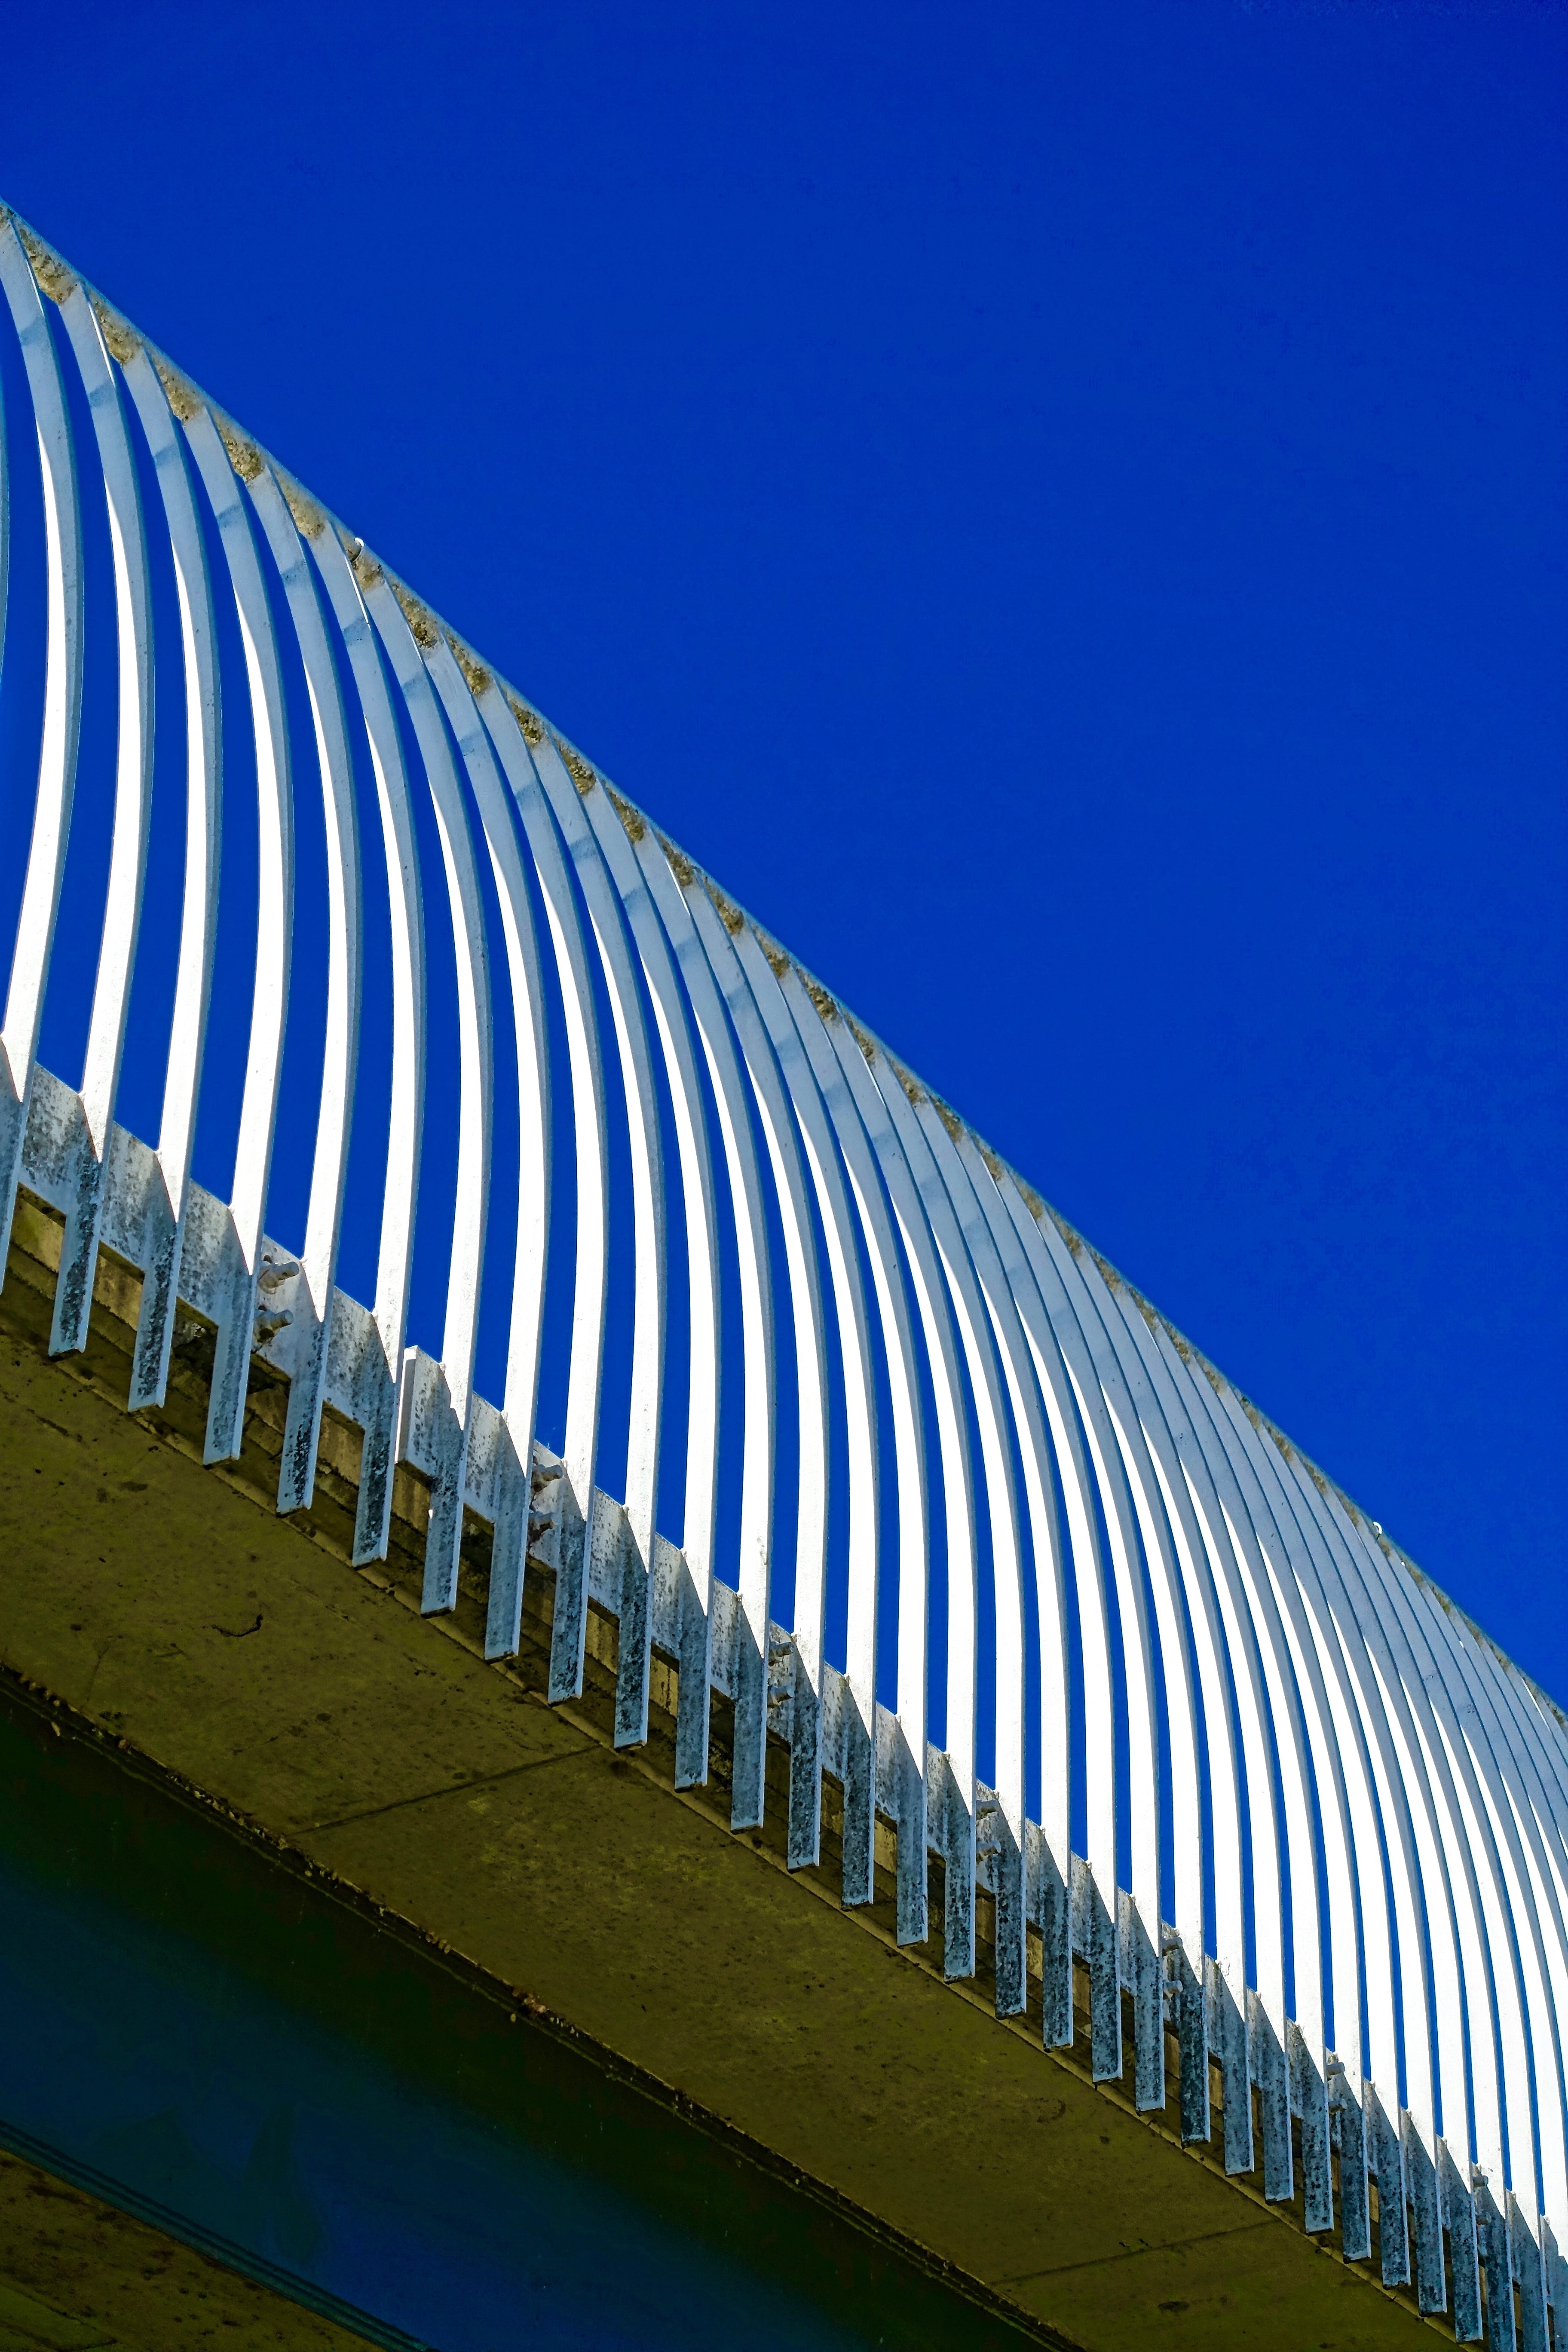 grey metal rail under blue skies during day time